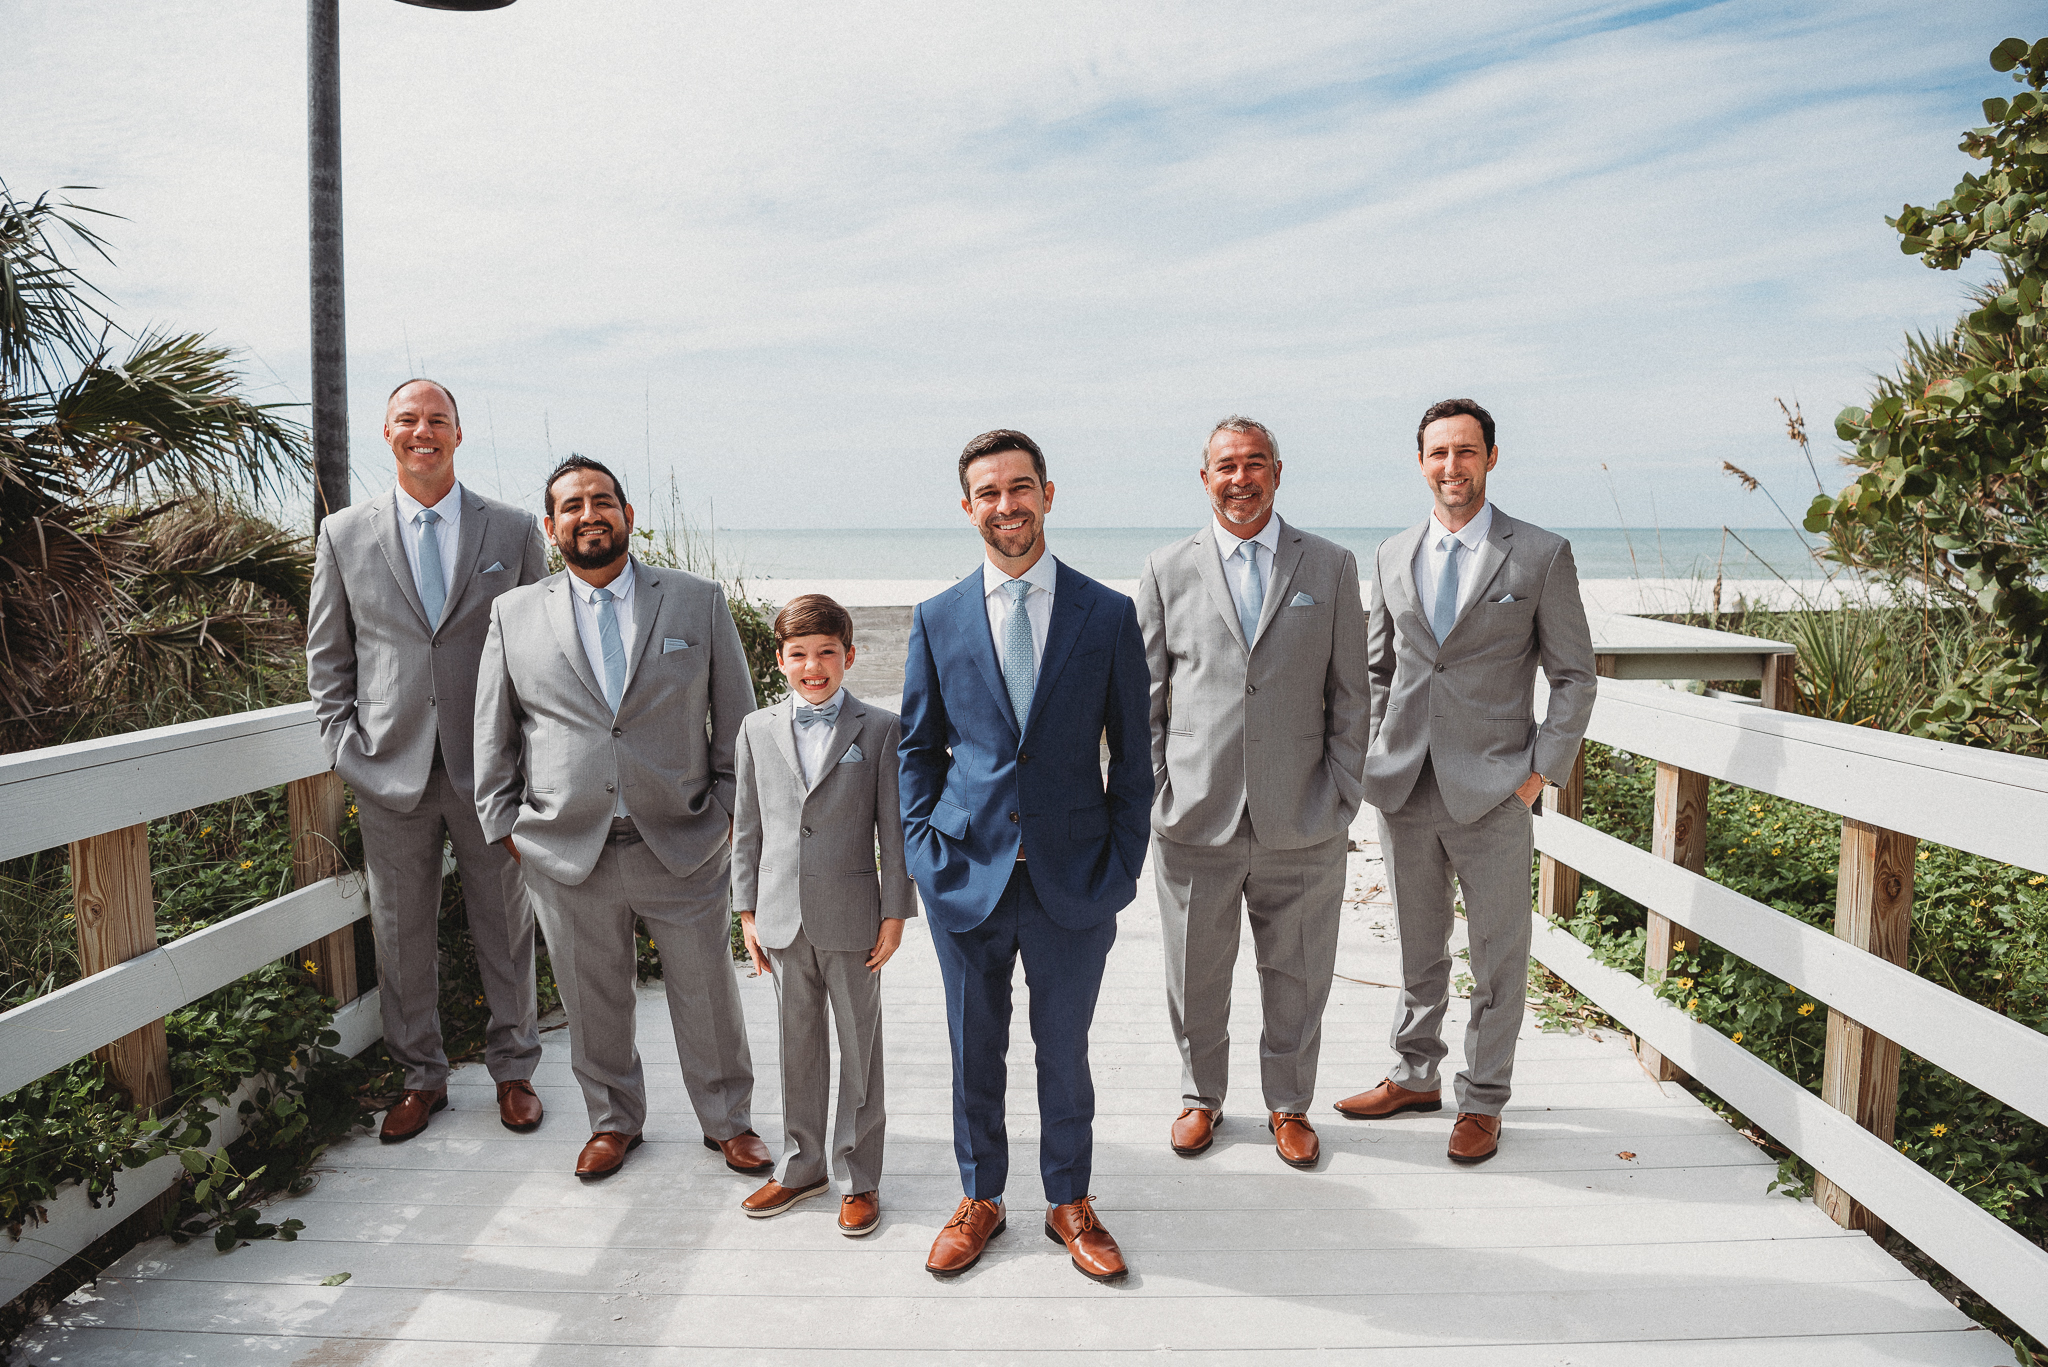 Caleo Photography, Florida Wedding Photographer, Brooksville, Florida Wedding Photographer, Second Shooter, Beach Wedding, Florida Wedding, Groomsmen Photo